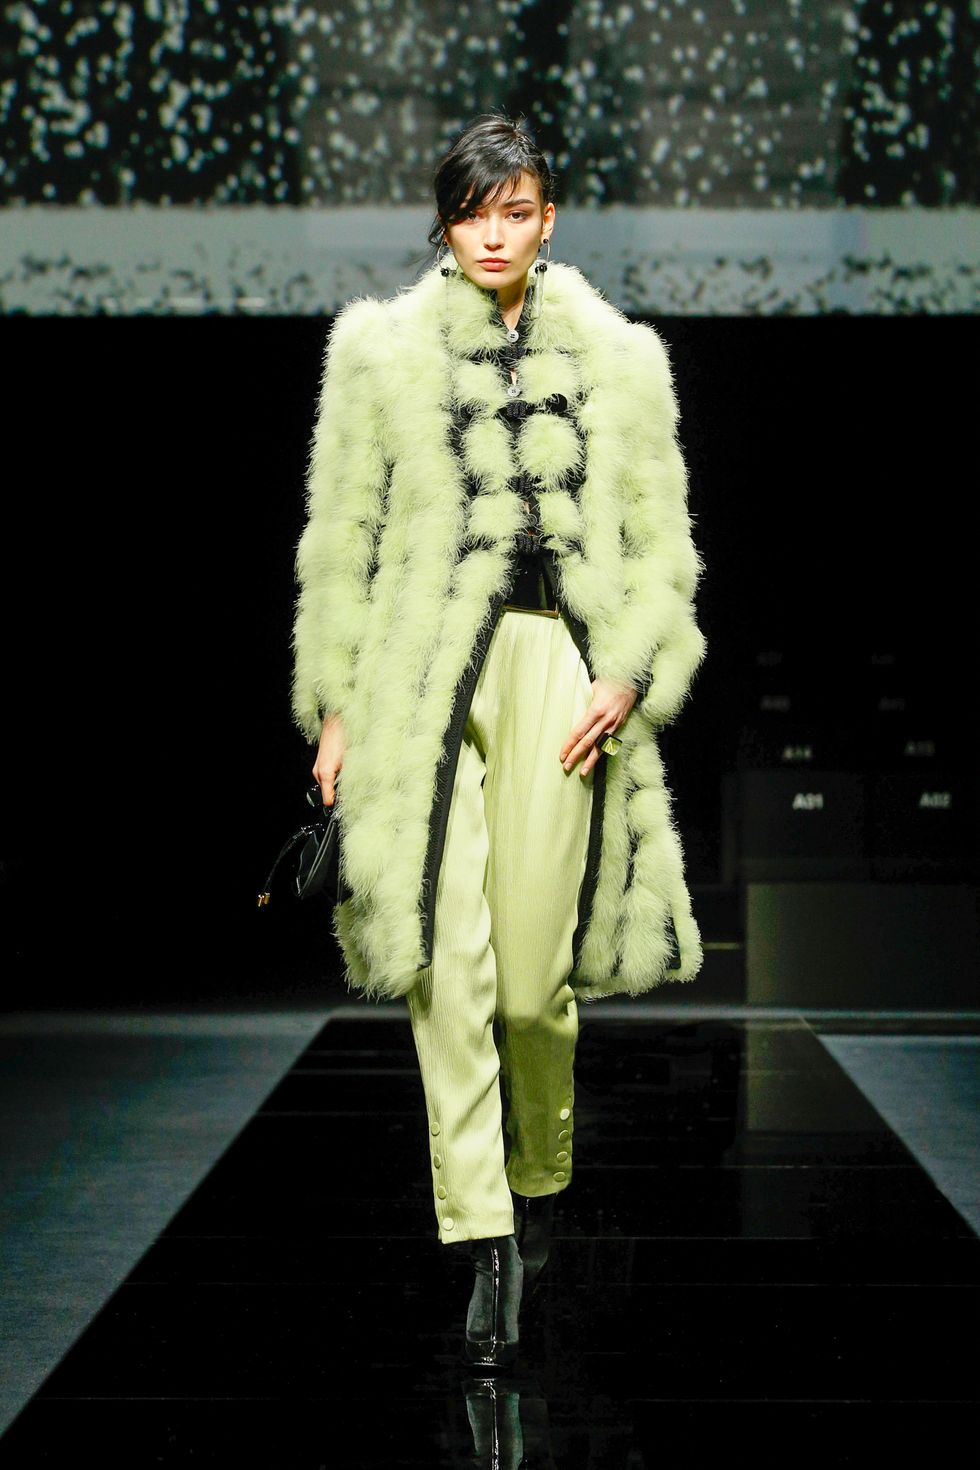 Milan Fashion Week Menswear SS20: Giorgio Armani Spring 2020